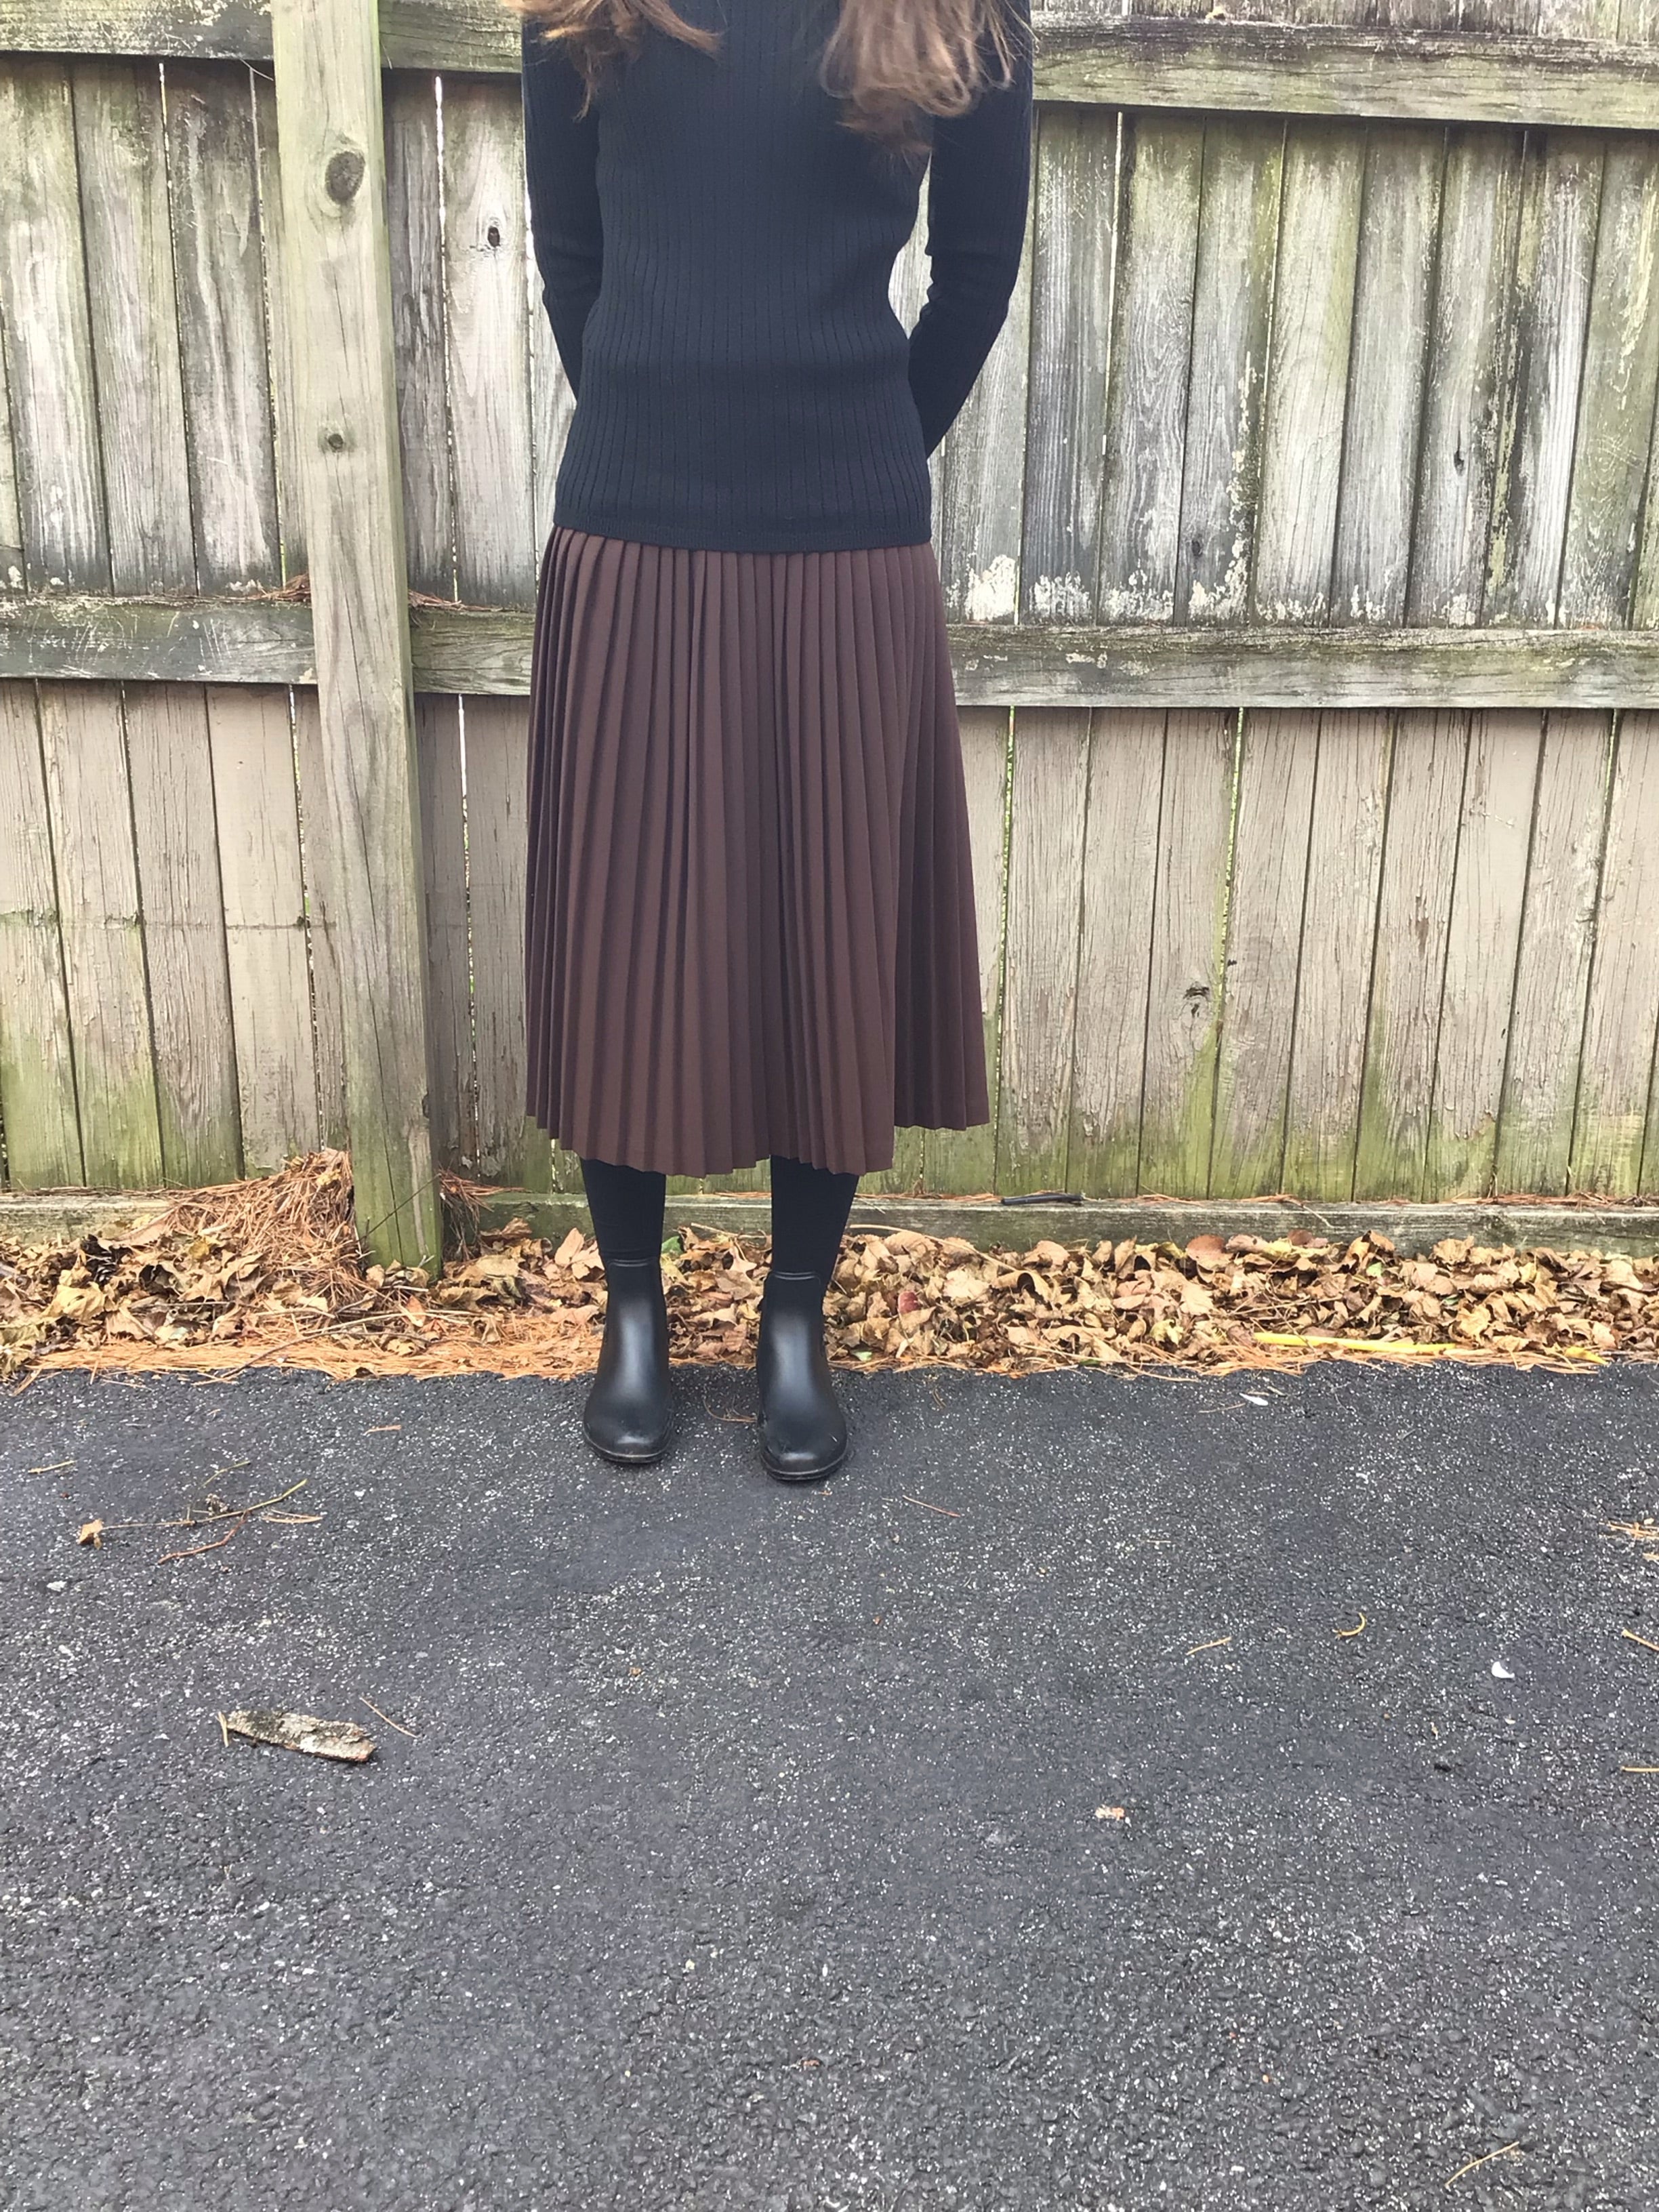 Accordian Pleated Skirt 442